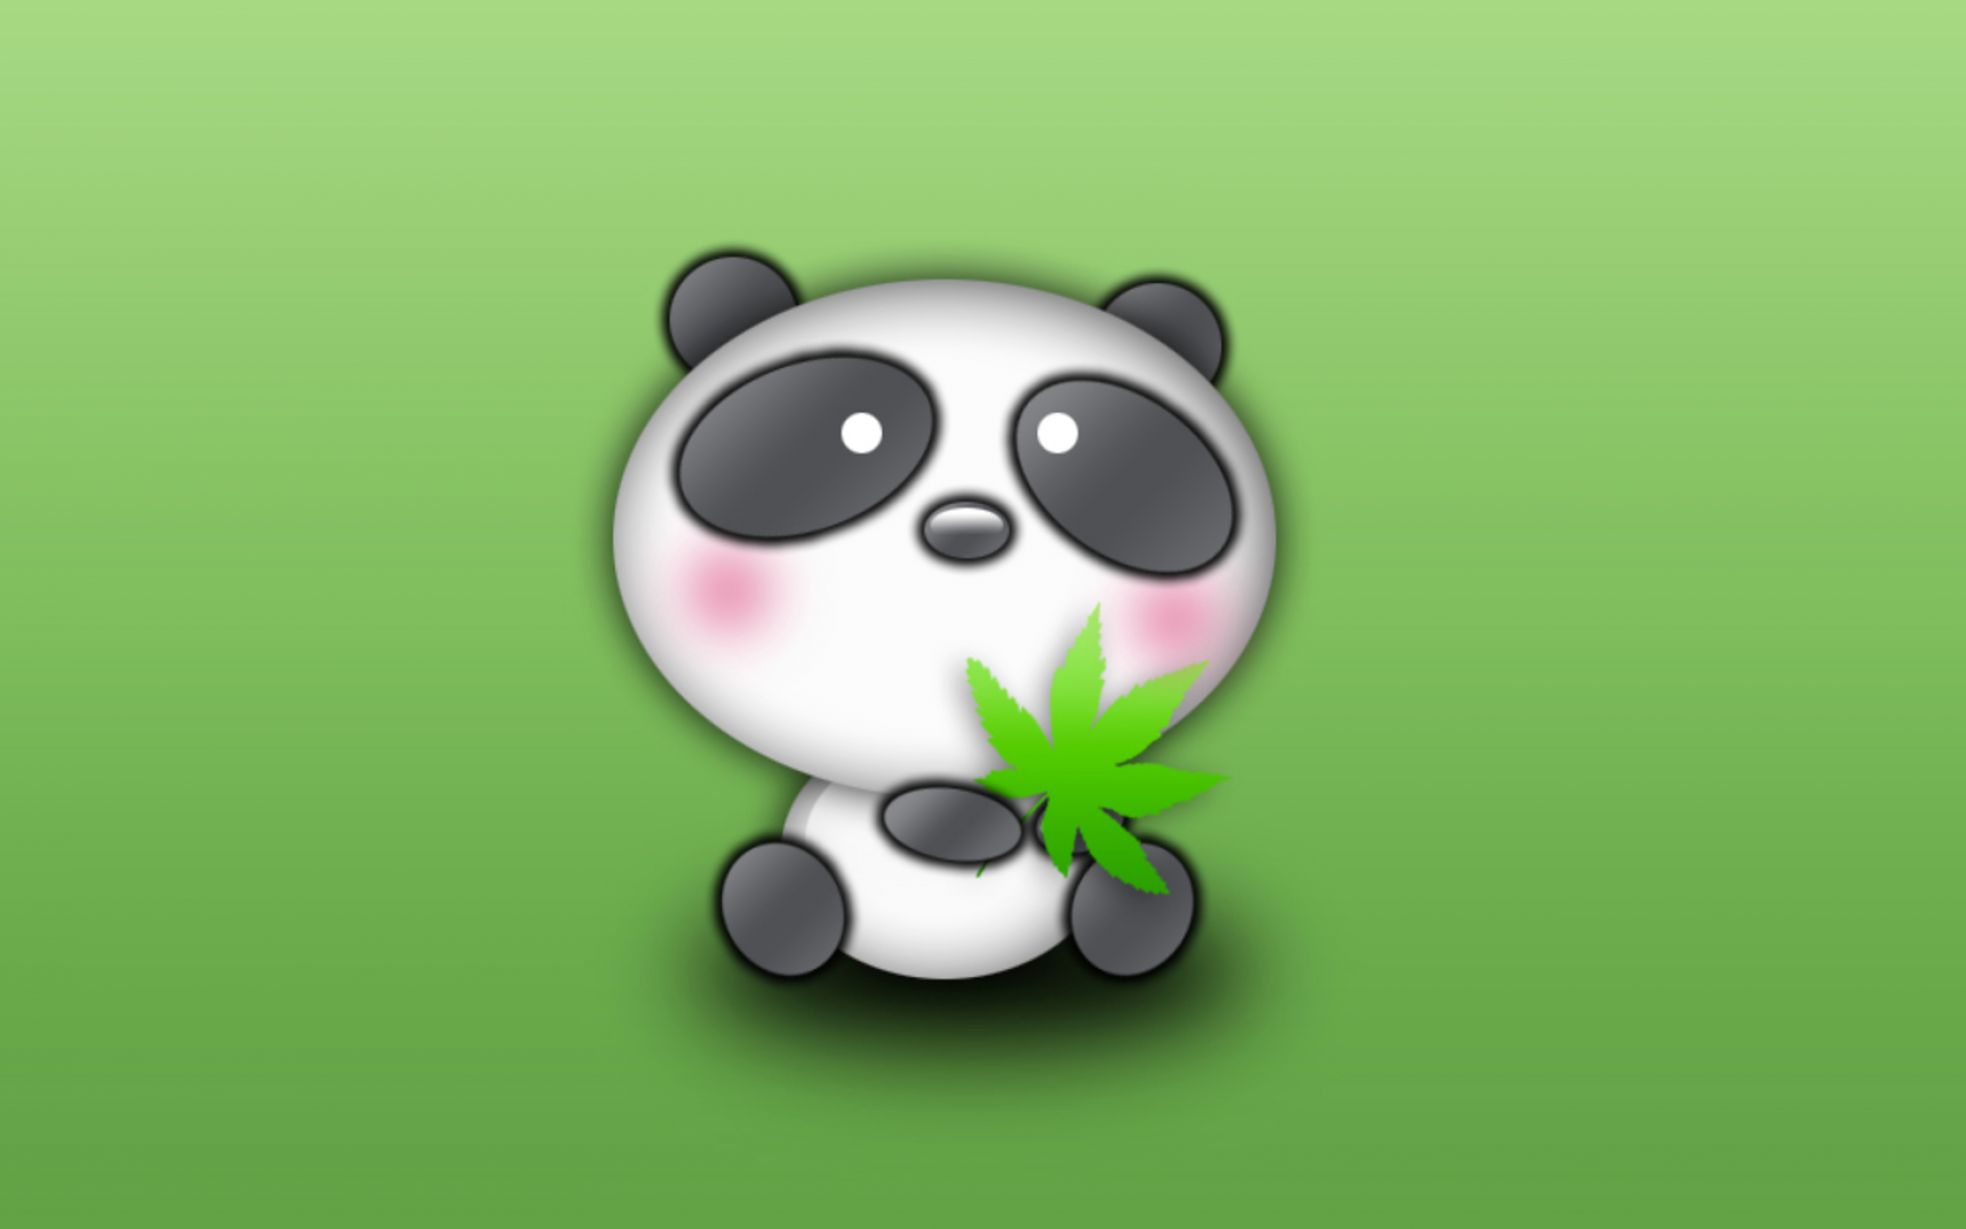 Cute Cartoon Baby Panda Drawing Free Image Download